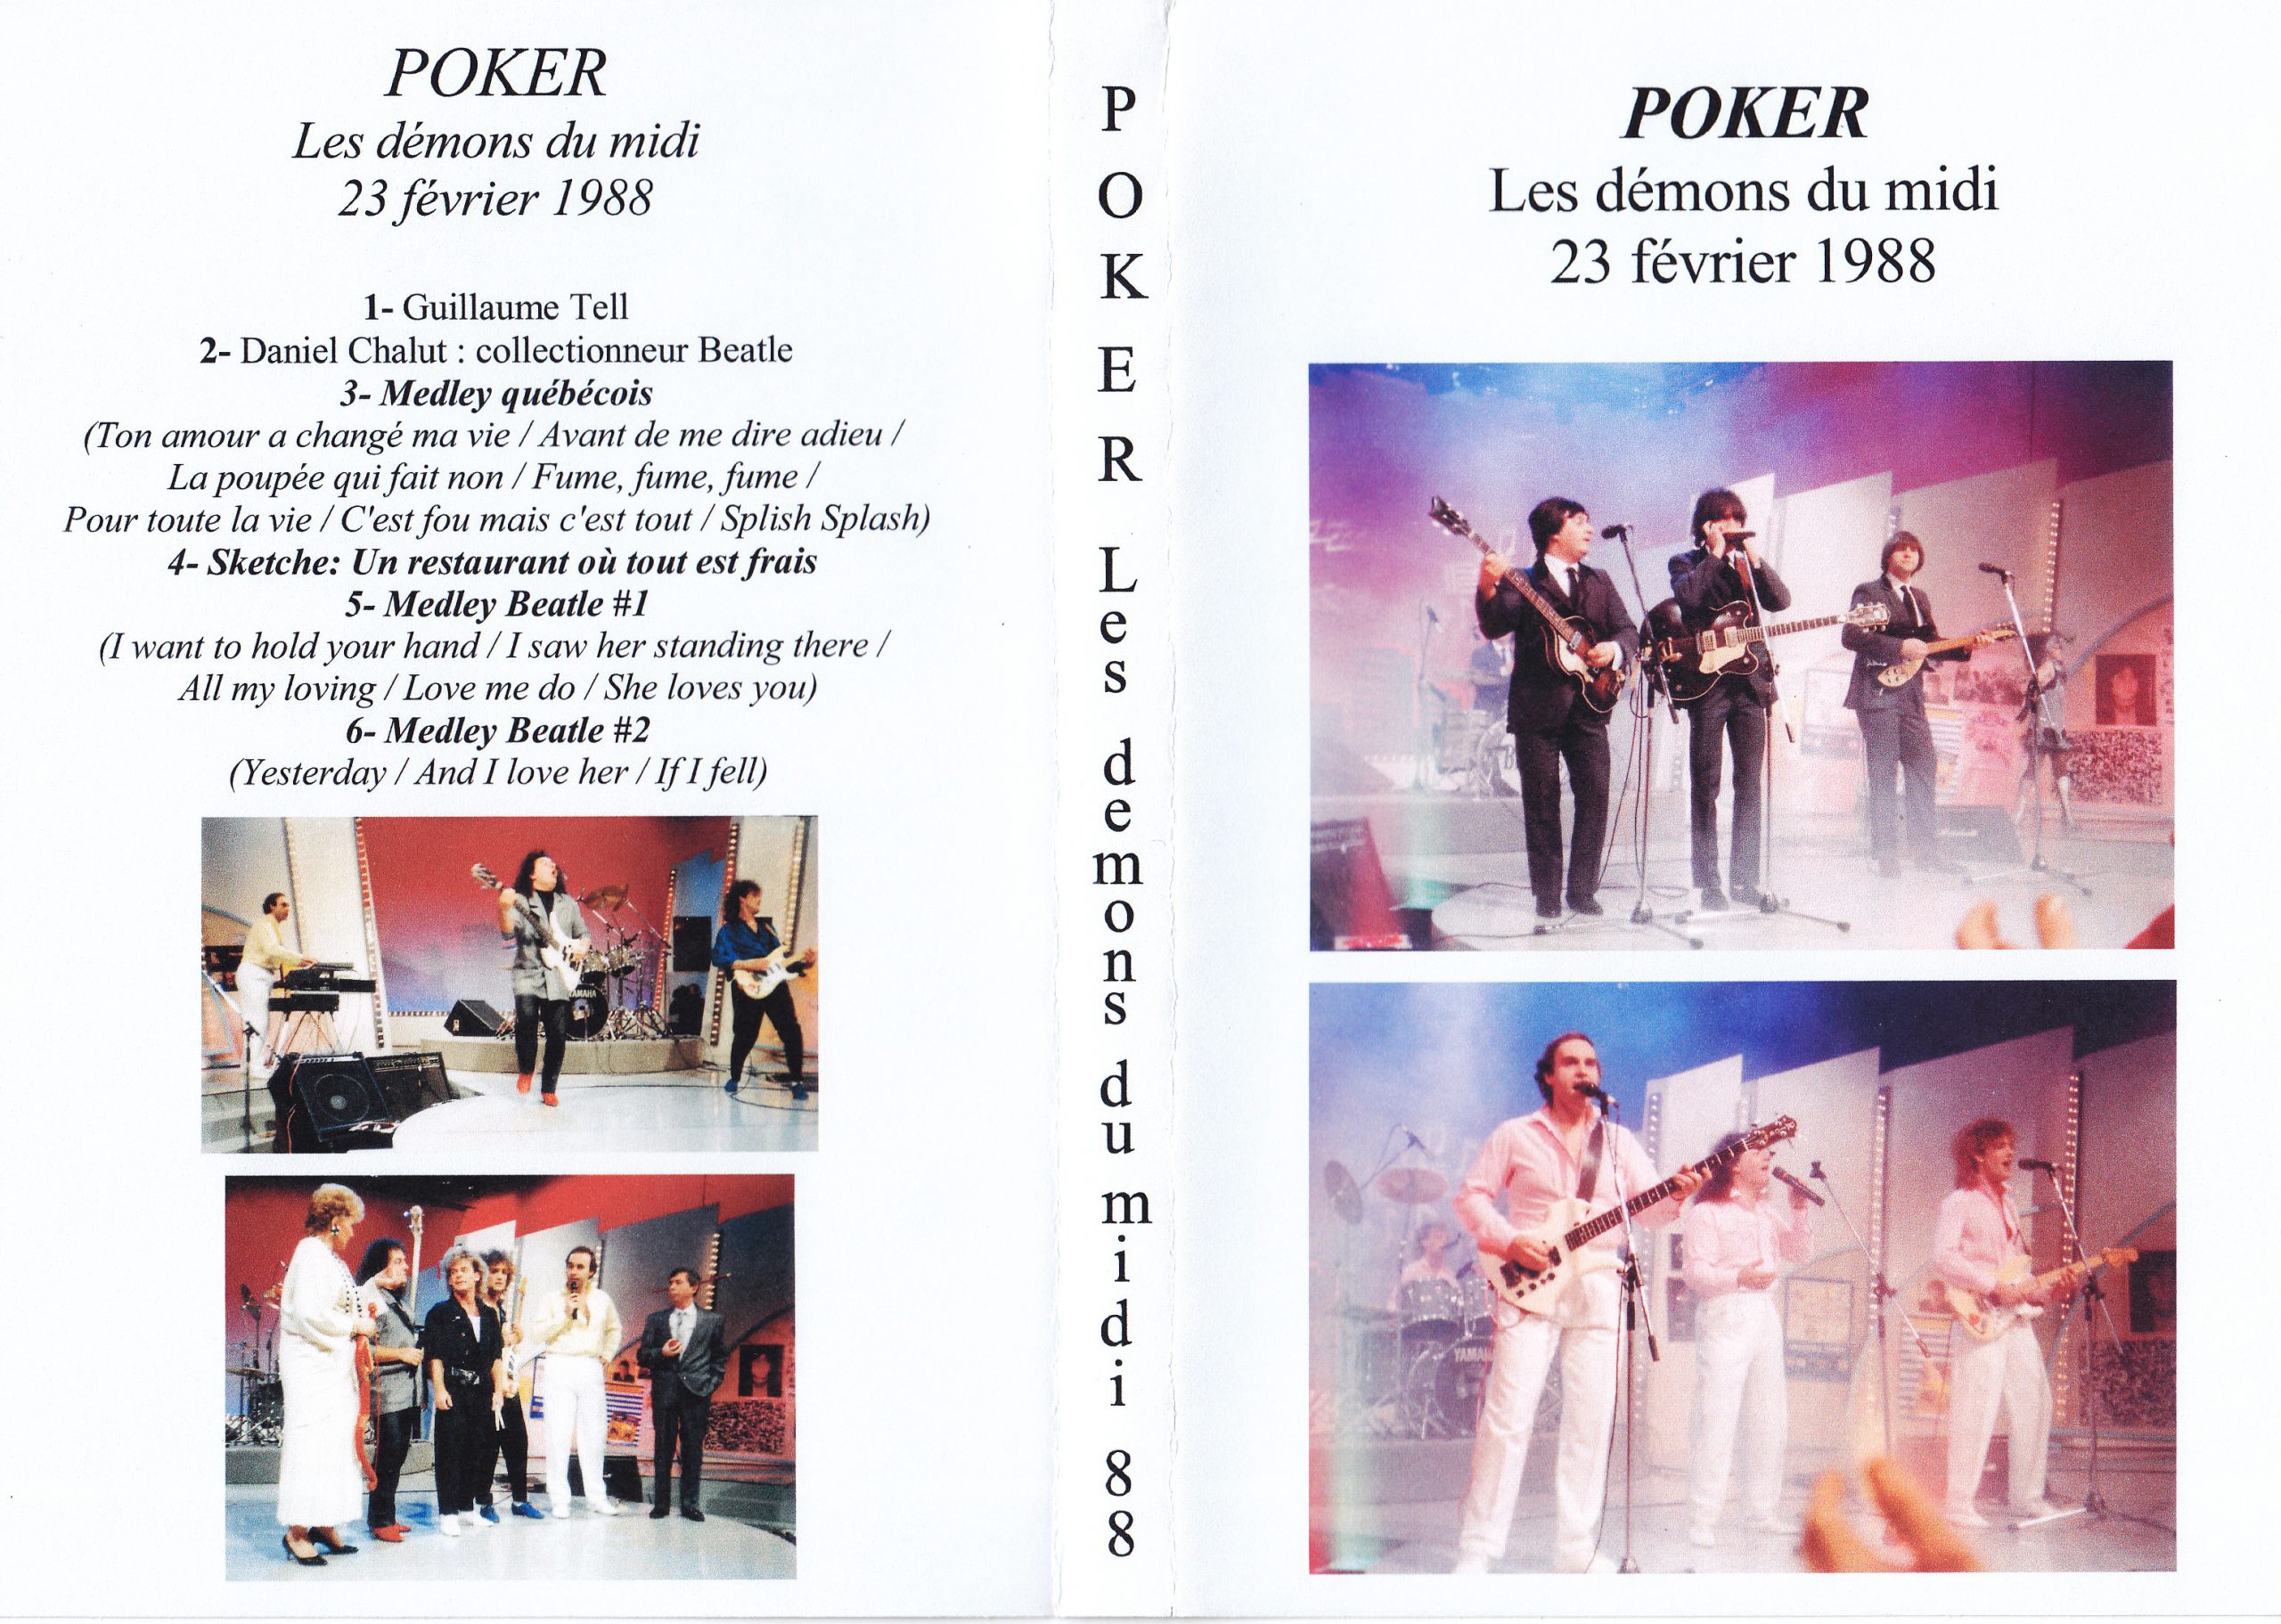 1988-poker-demon-du-midi